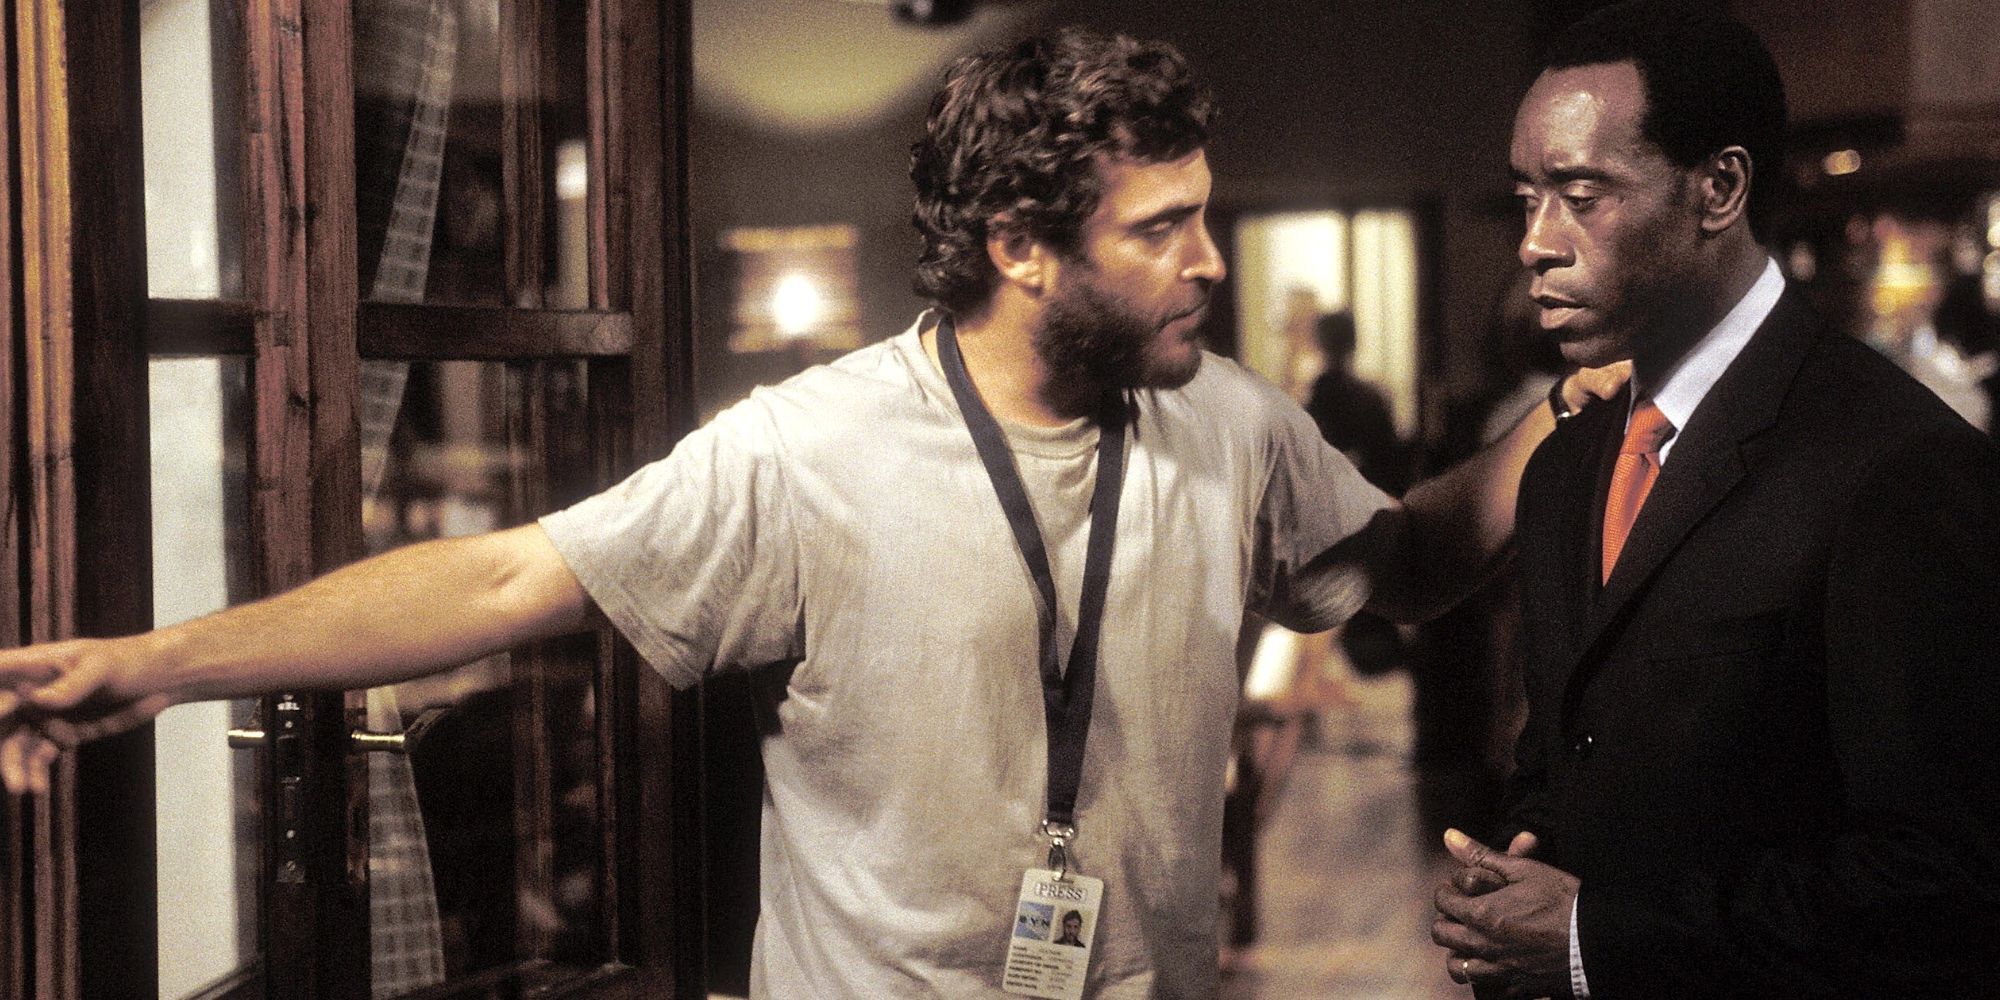 Joaquin Phoenix berdiri di samping Don Cheadle dan mengarahkannya ke depan dengan tangan lainnya di bahunya di Hotel Rwanda